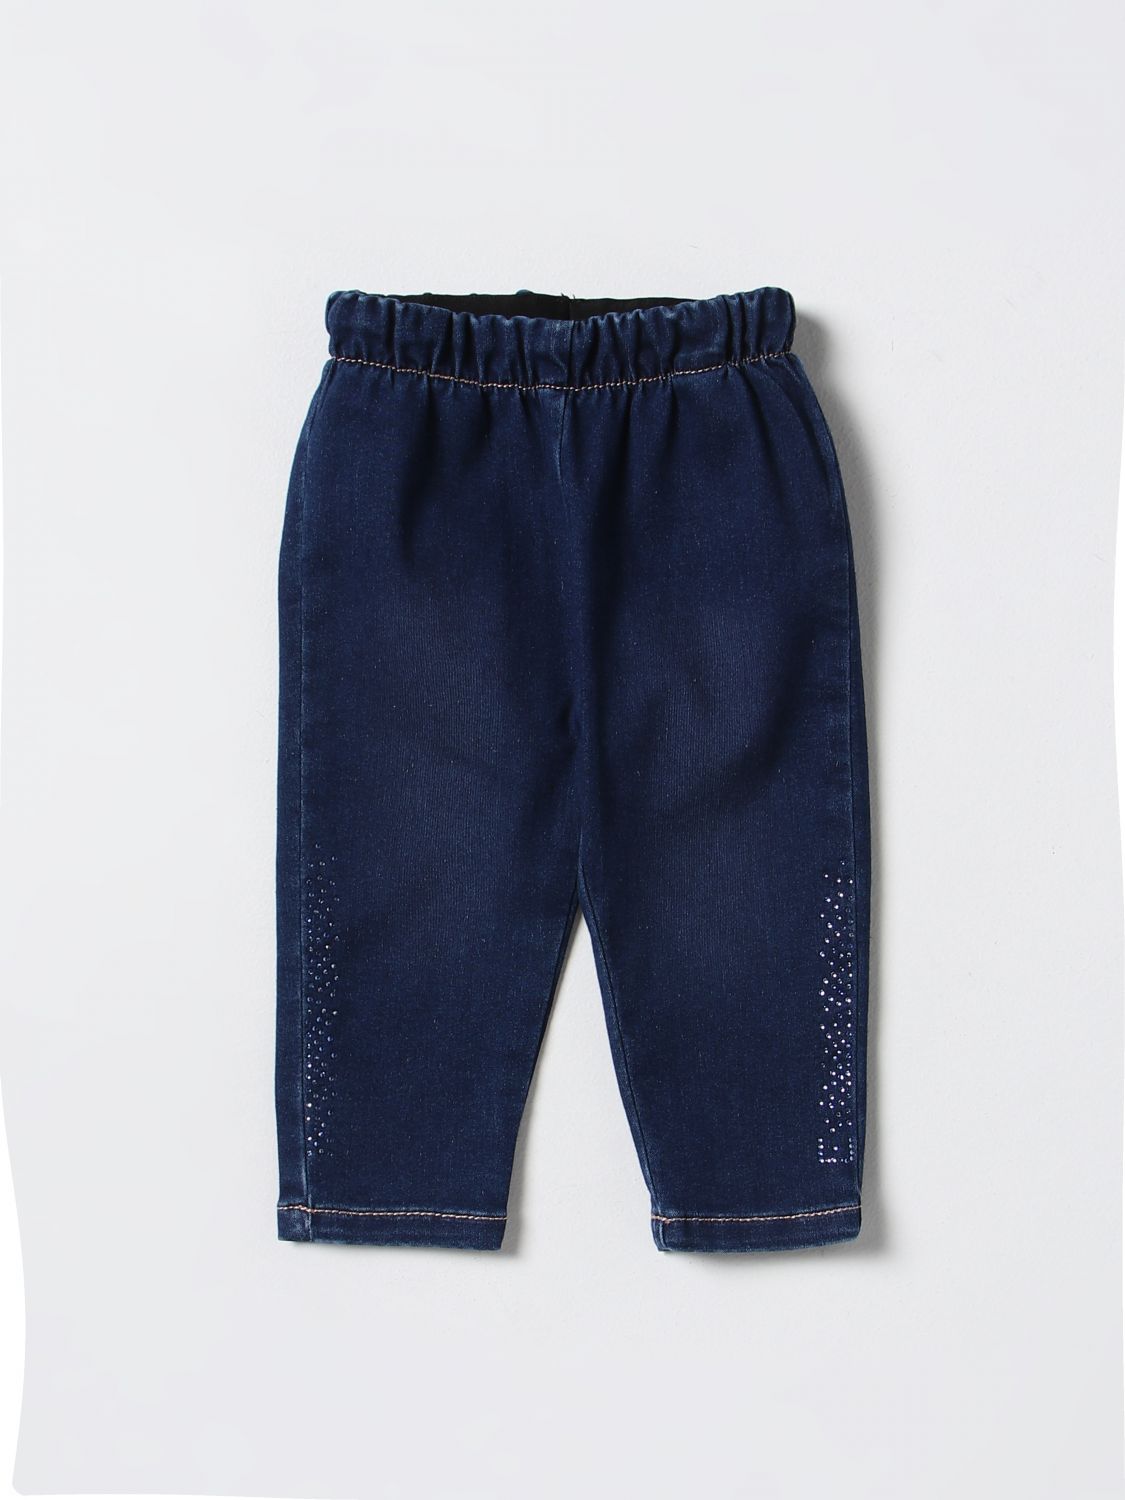 LIU JO KIDS: pants for baby - Denim | Liu Jo Kids pants KA3128F0934 ...